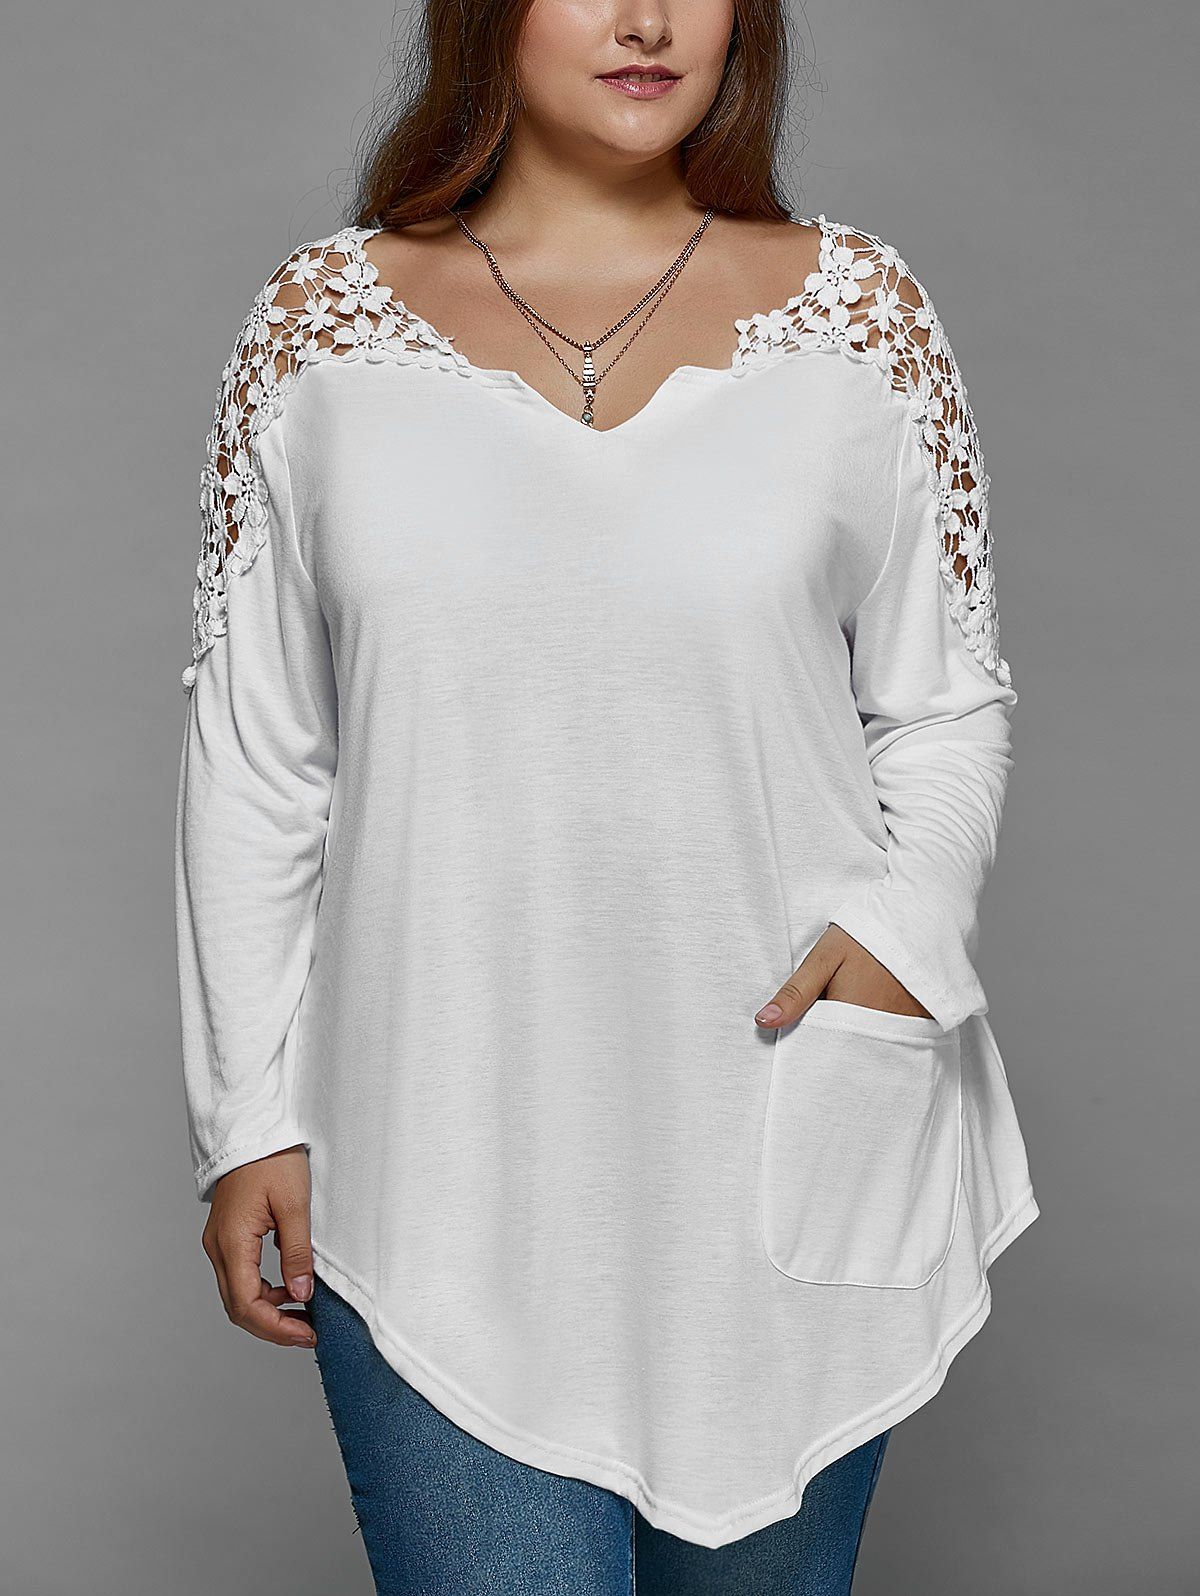 Plus Size Lace Insert Long Sleeve Tunic T-Shirt - WHITE XL